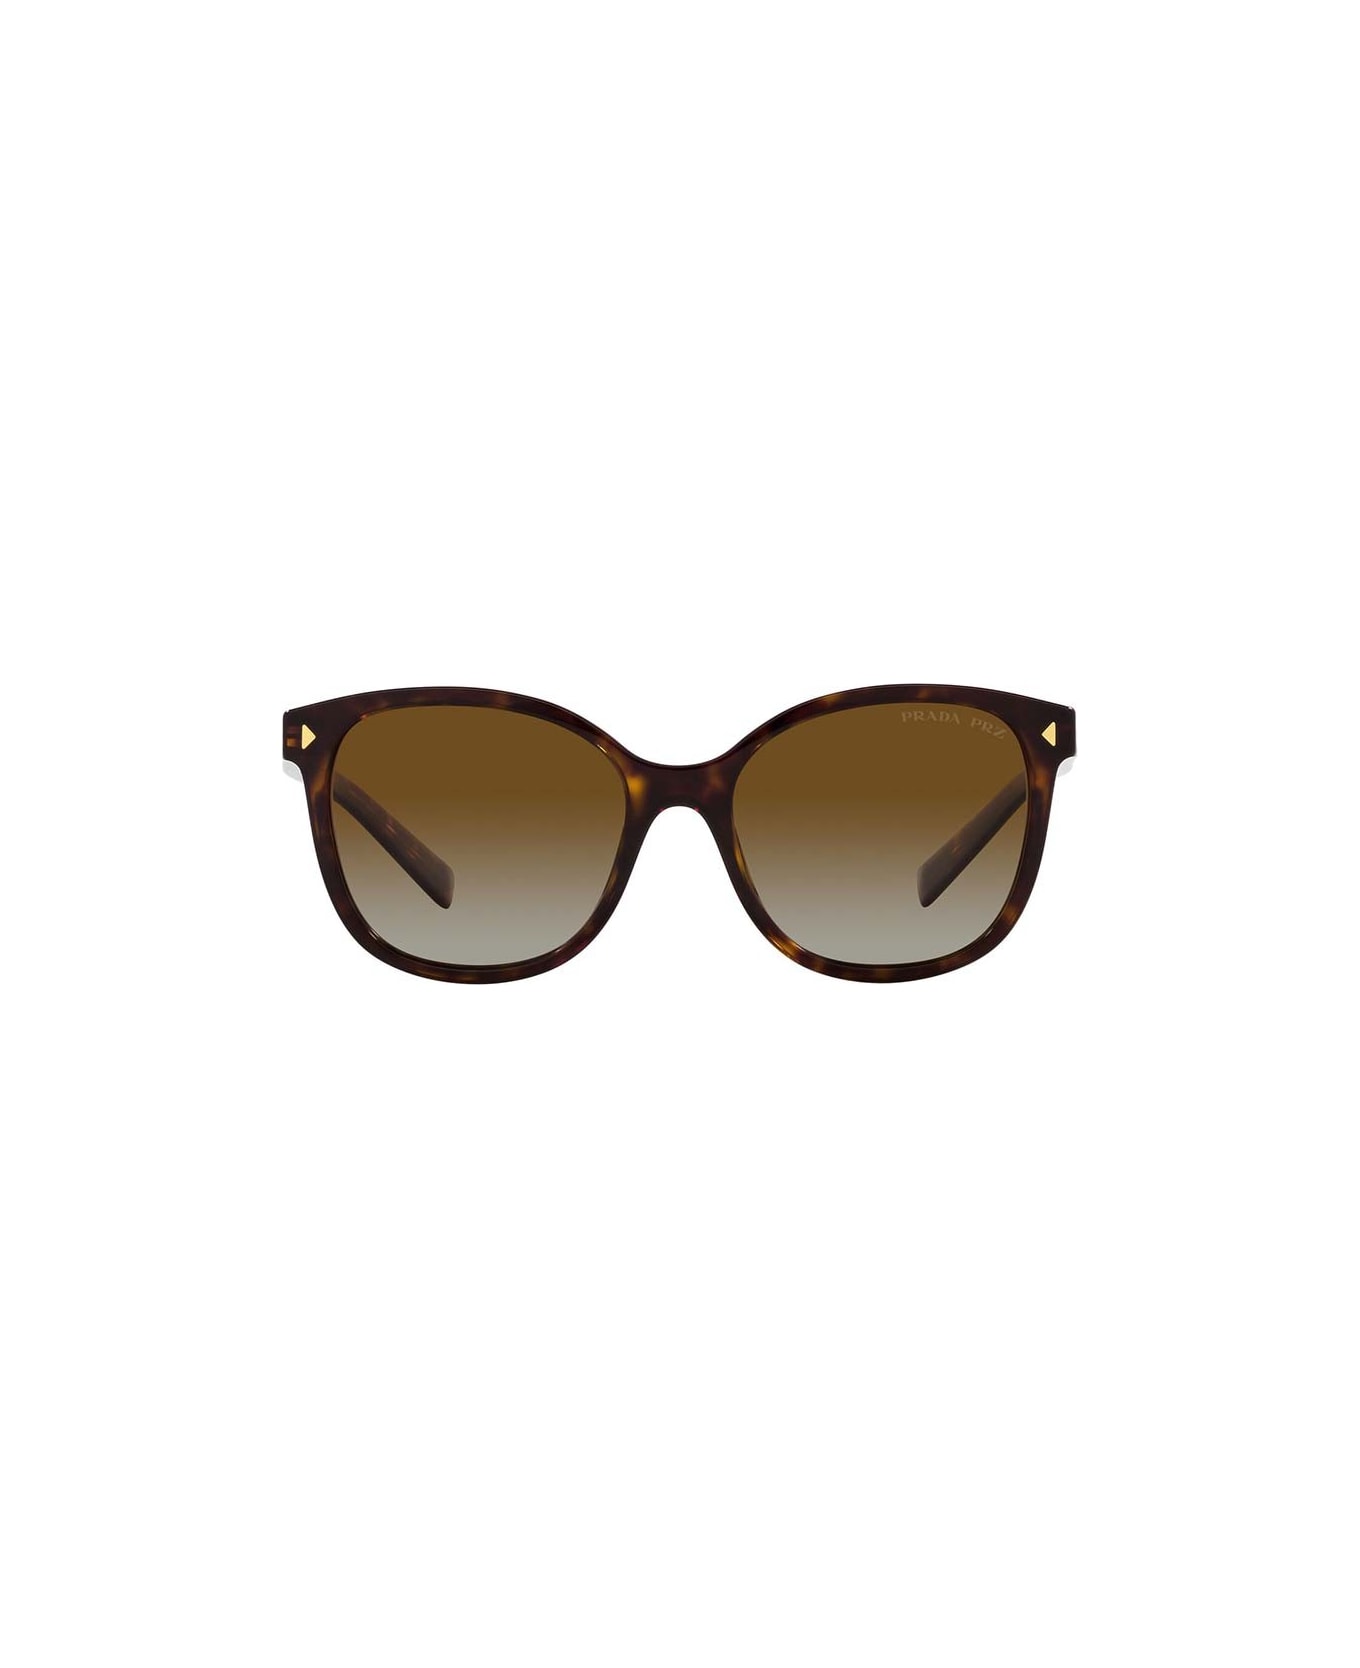 Prada Eyewear Sunglasses - 2AU6E1